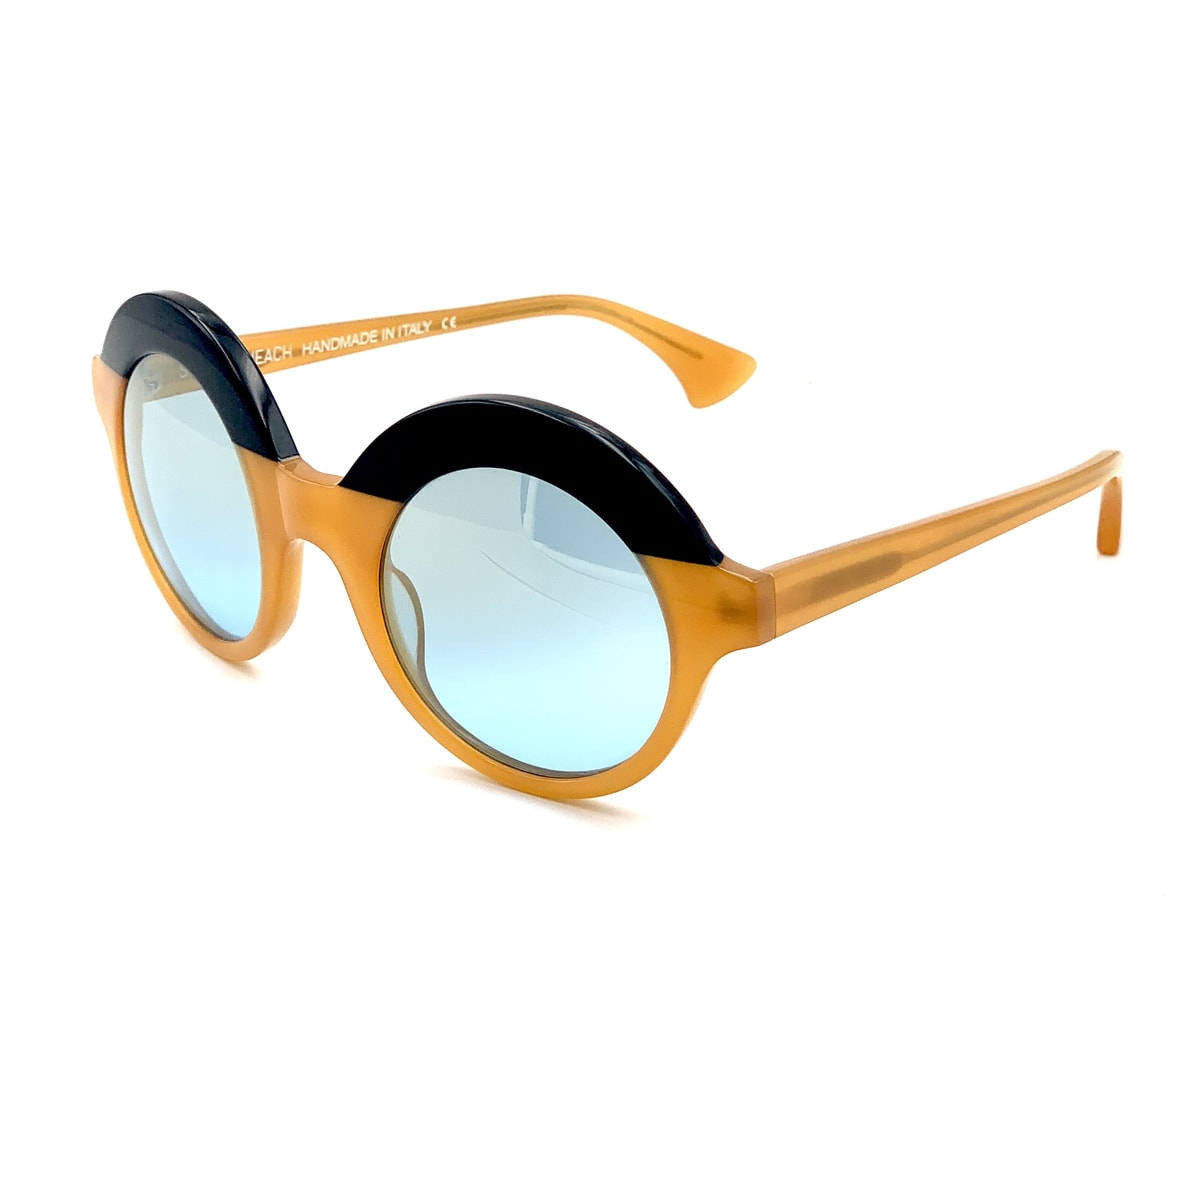 Silvian Heach Okinawa/s 04 Sunglasses In Multi